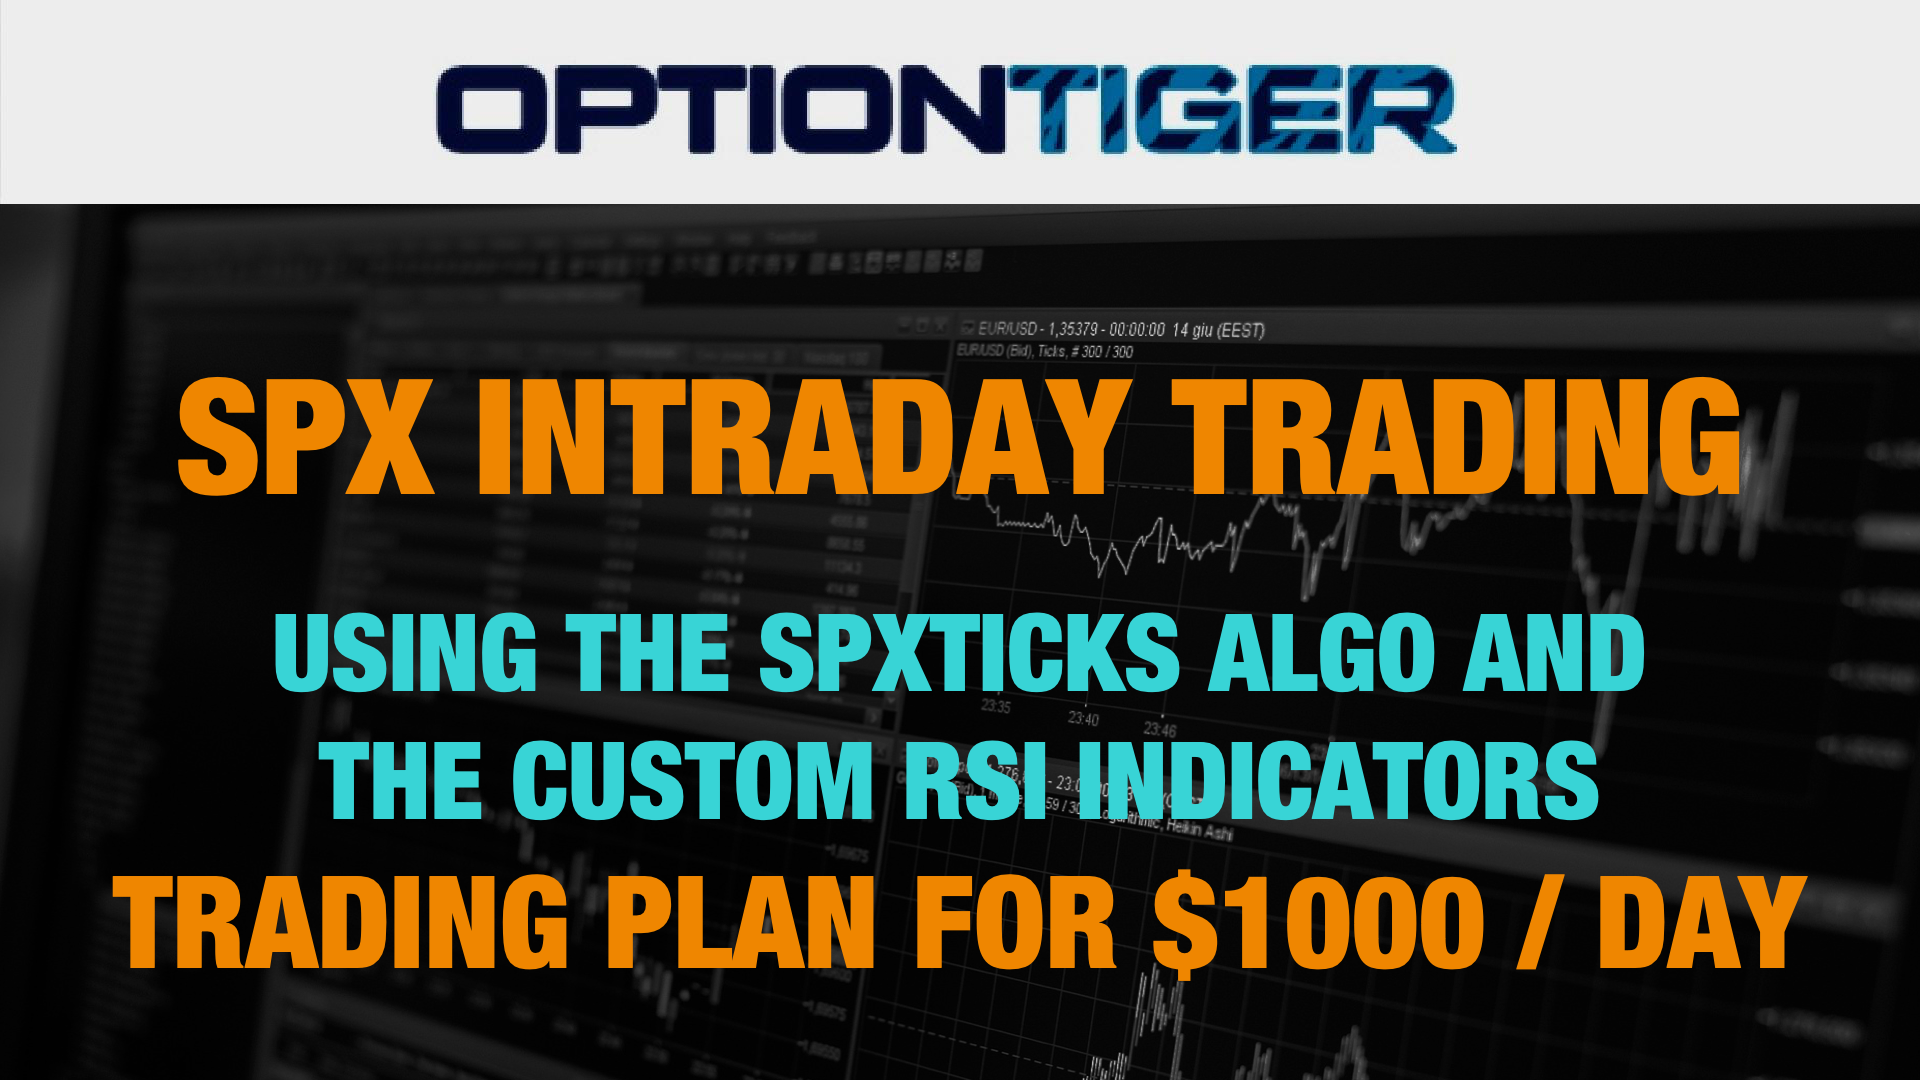 SPX Intraday Trading plan